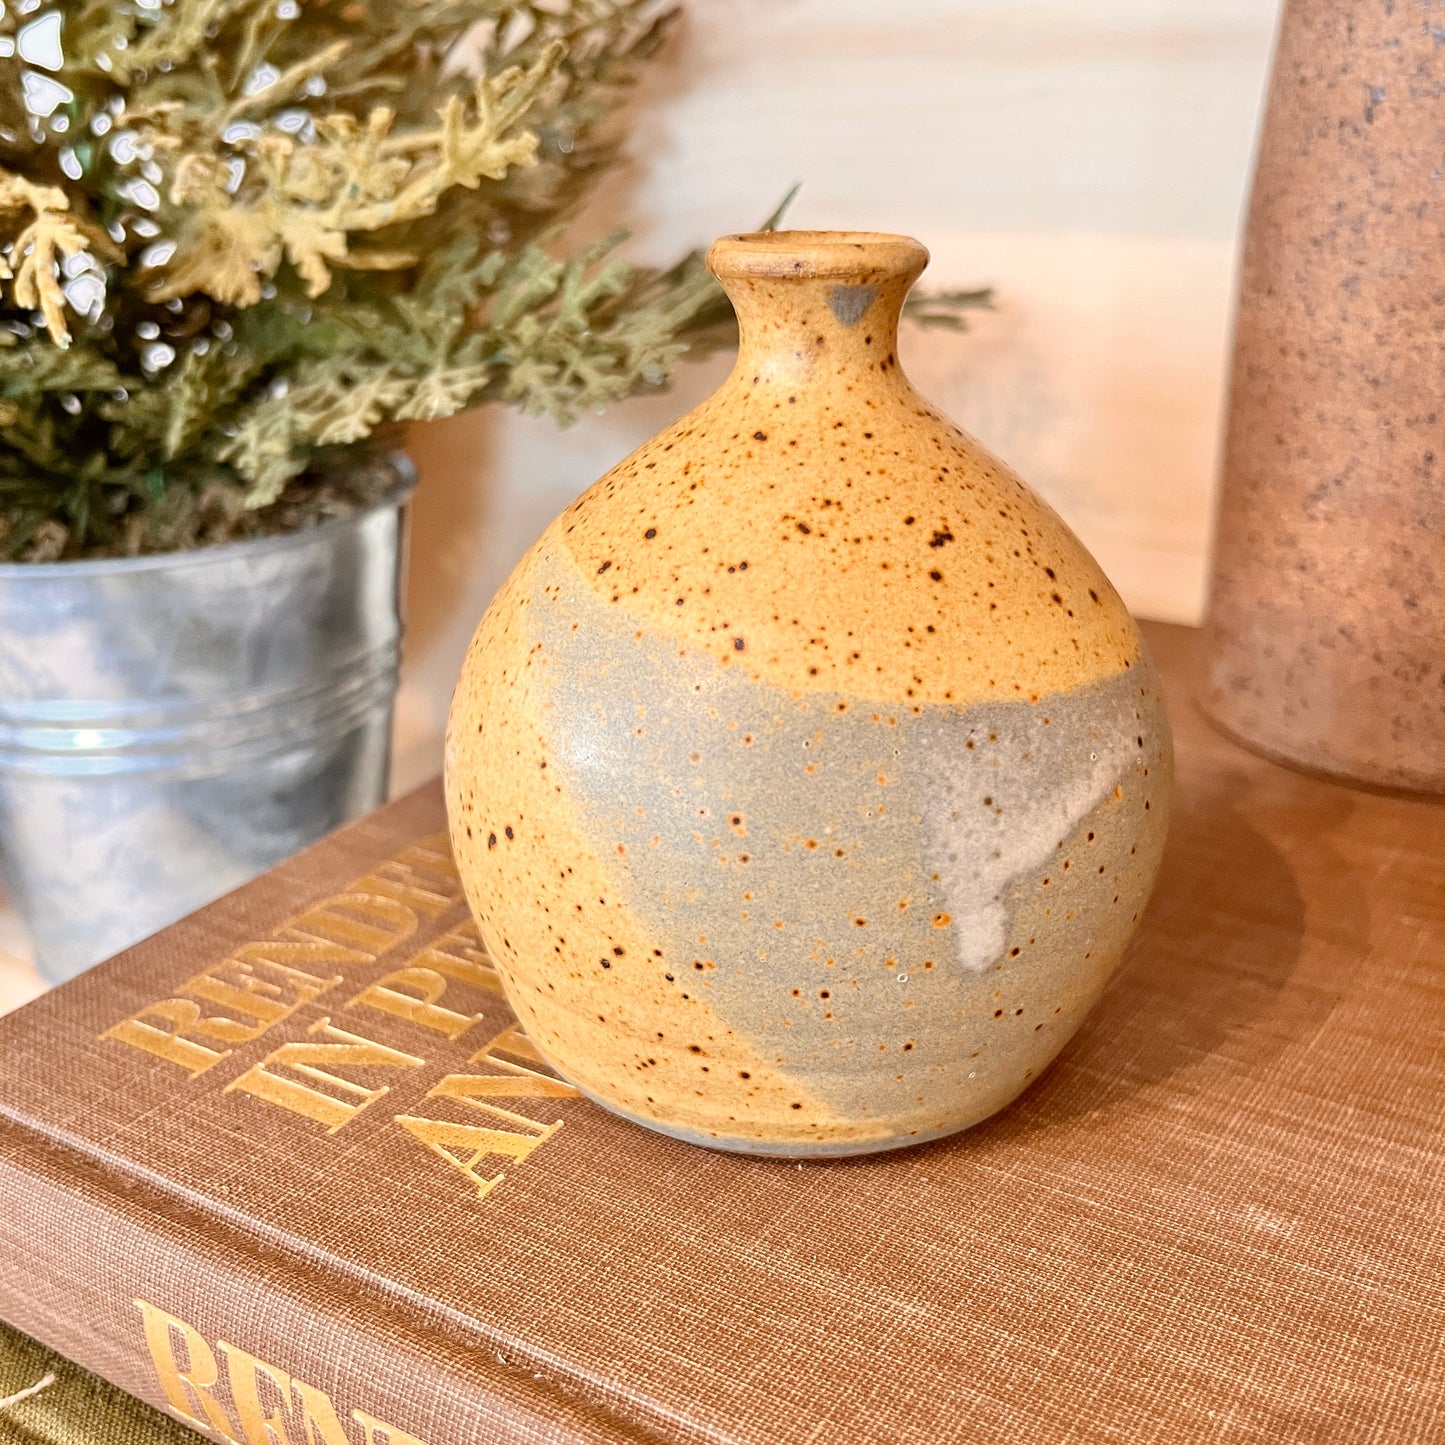 Small stoneware vase